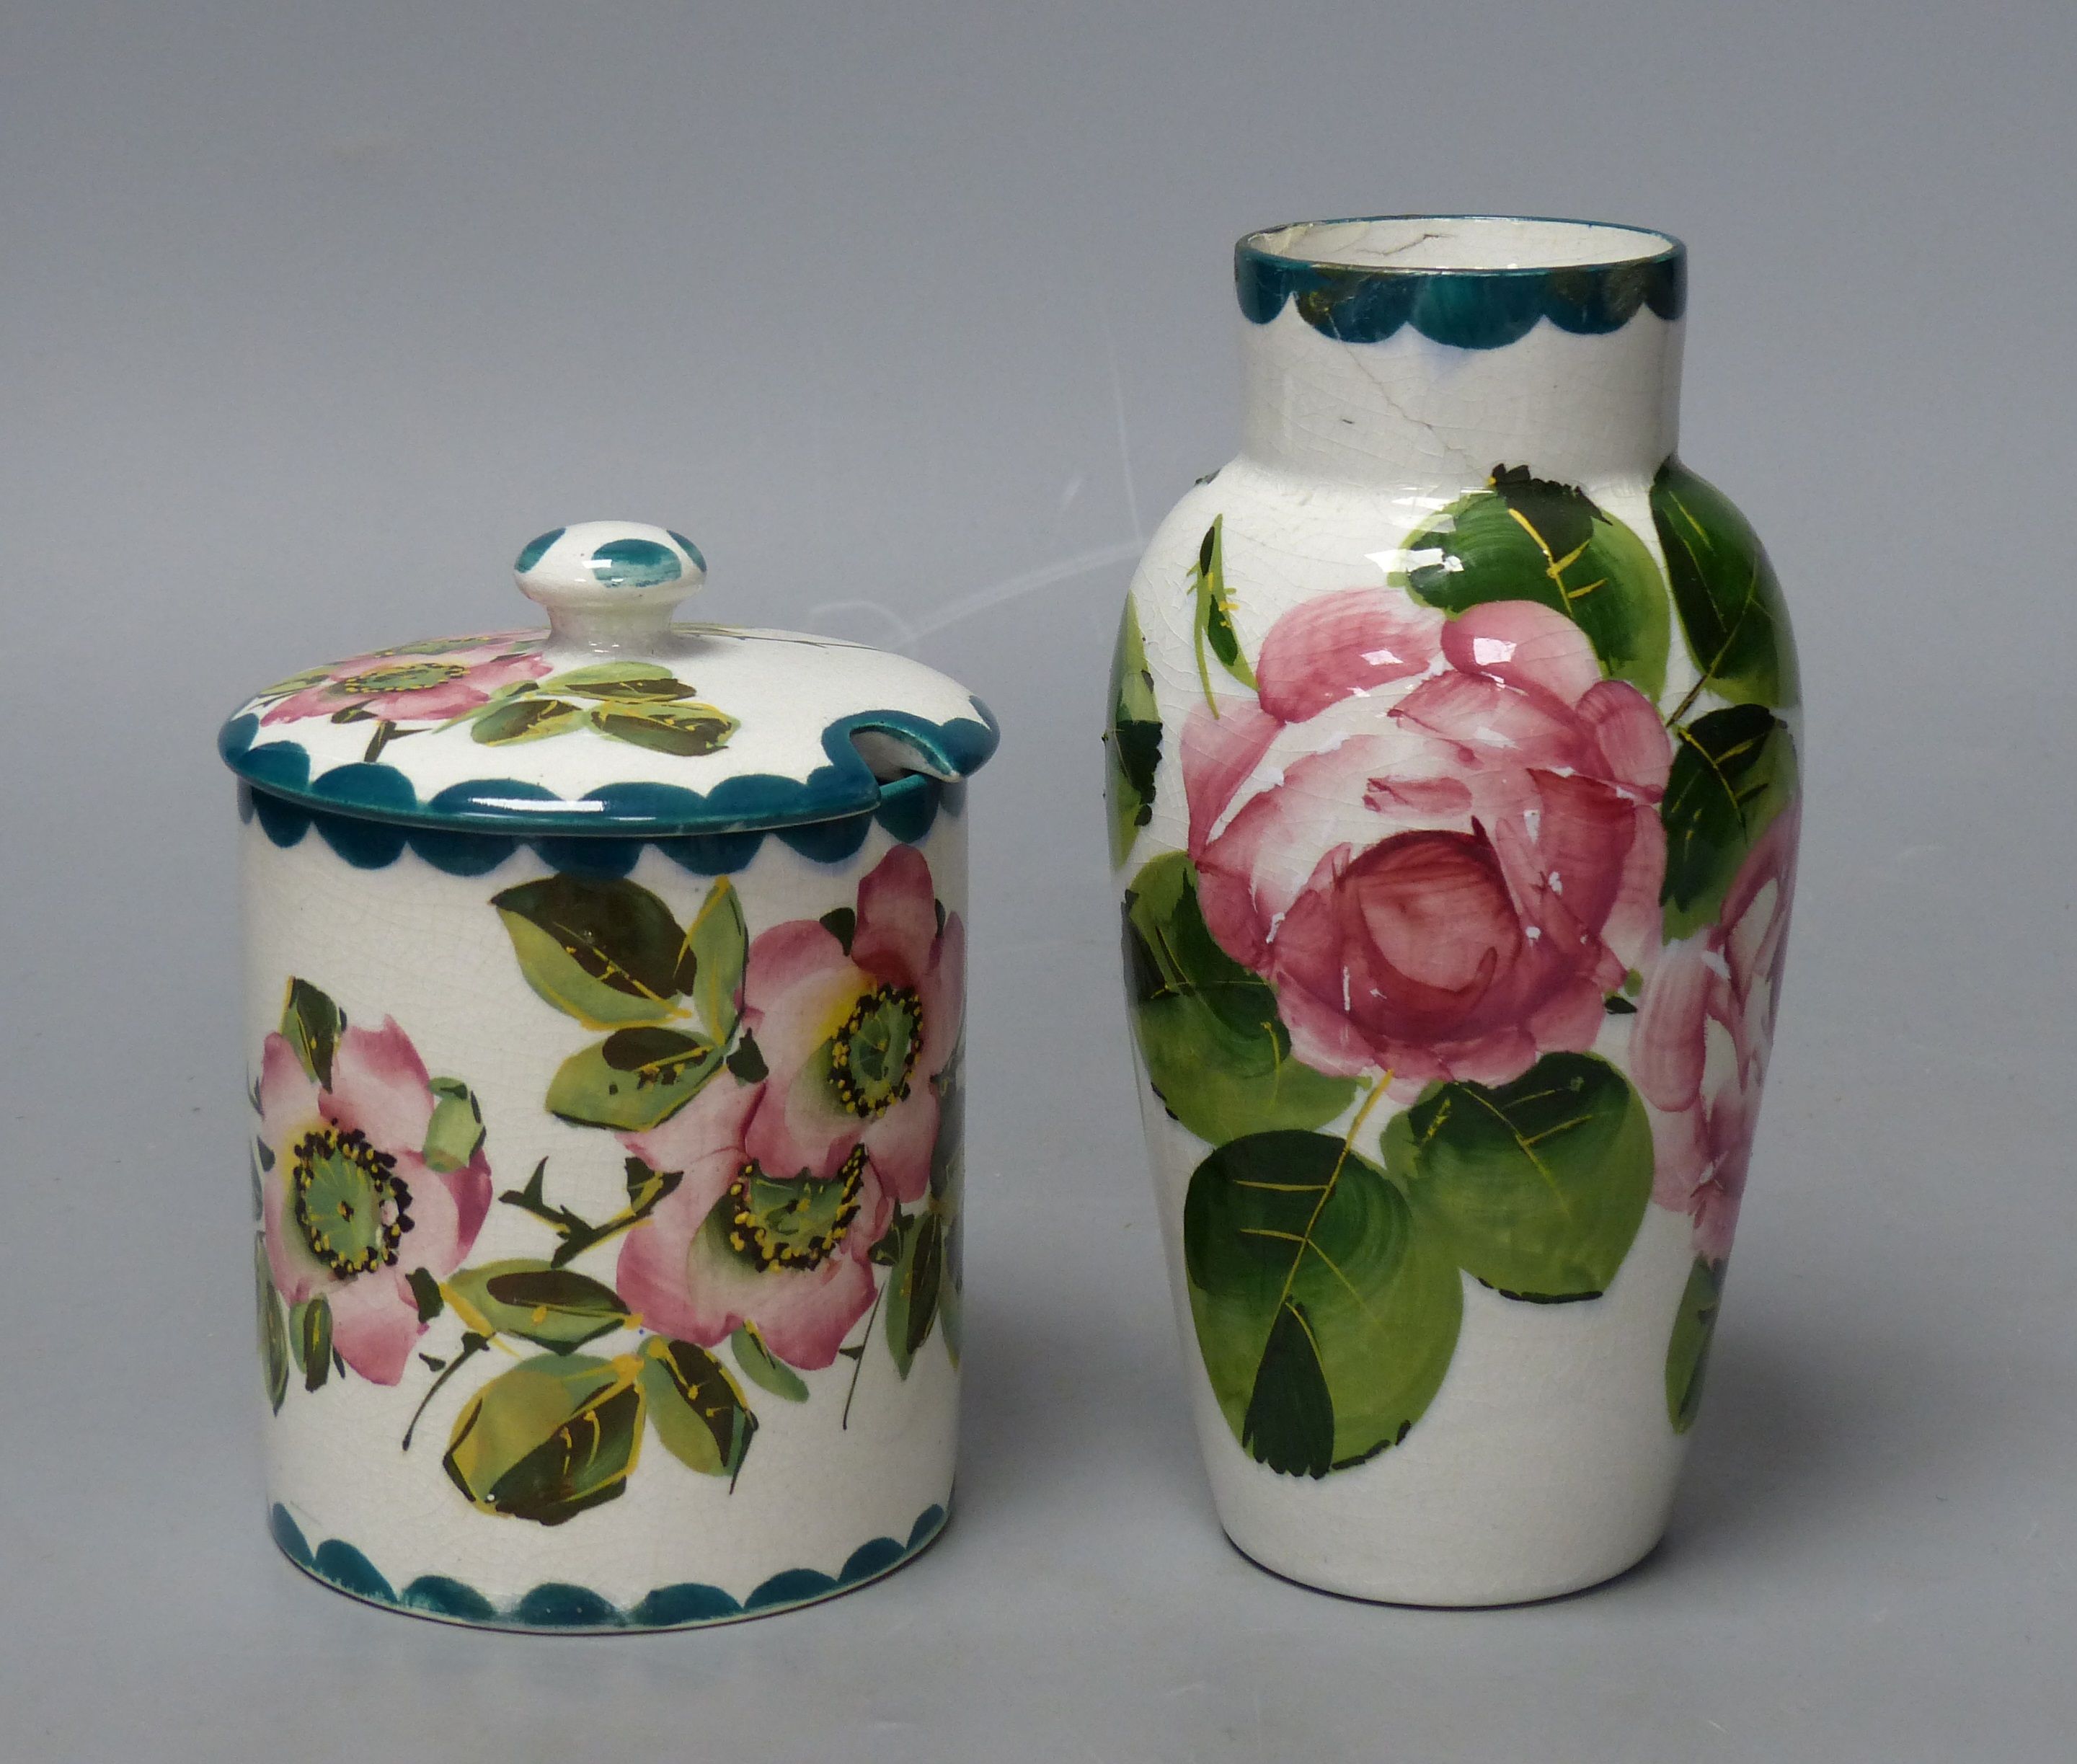 A Wemyss cabbage rose vase and a wild rose pattern lidded preserve jar, tallest 16cm